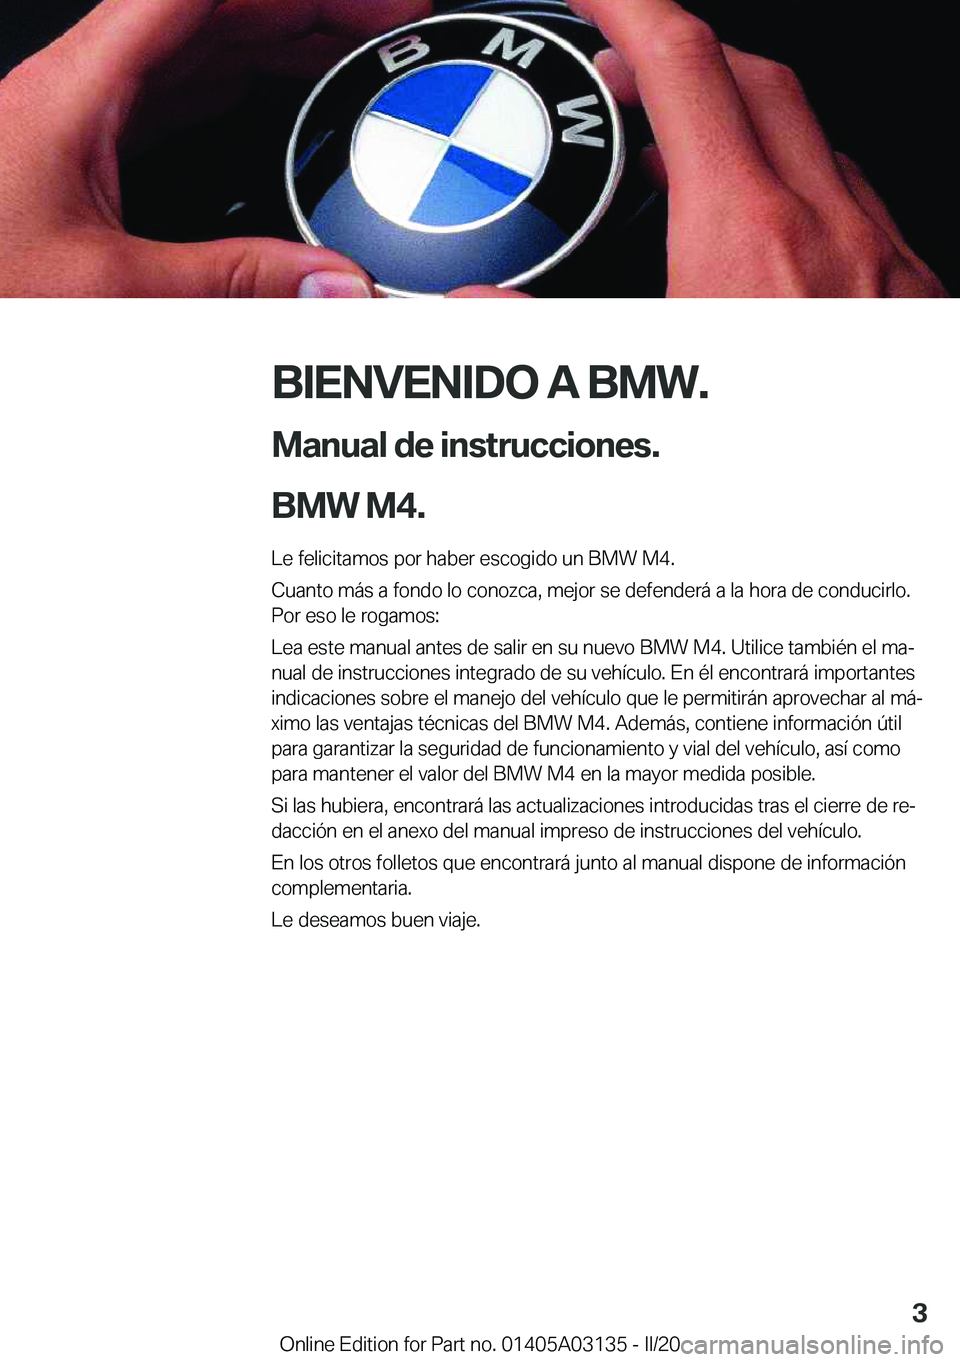 BMW M4 2020  Manuales de Empleo (in Spanish) �B�I�E�N�V�E�N�I�D�O��A��B�M�W�.
�M�a�n�u�a�l��d�e��i�n�s�t�r�u�c�c�i�o�n�e�s�.
�B�M�W��M�4�. �L�e��f�e�l�i�c�i�t�a�m�o�s��p�o�r��h�a�b�e�r��e�s�c�o�g�i�d�o��u�n��B�M�W��M�4�.
�C�u�a�n�t�o